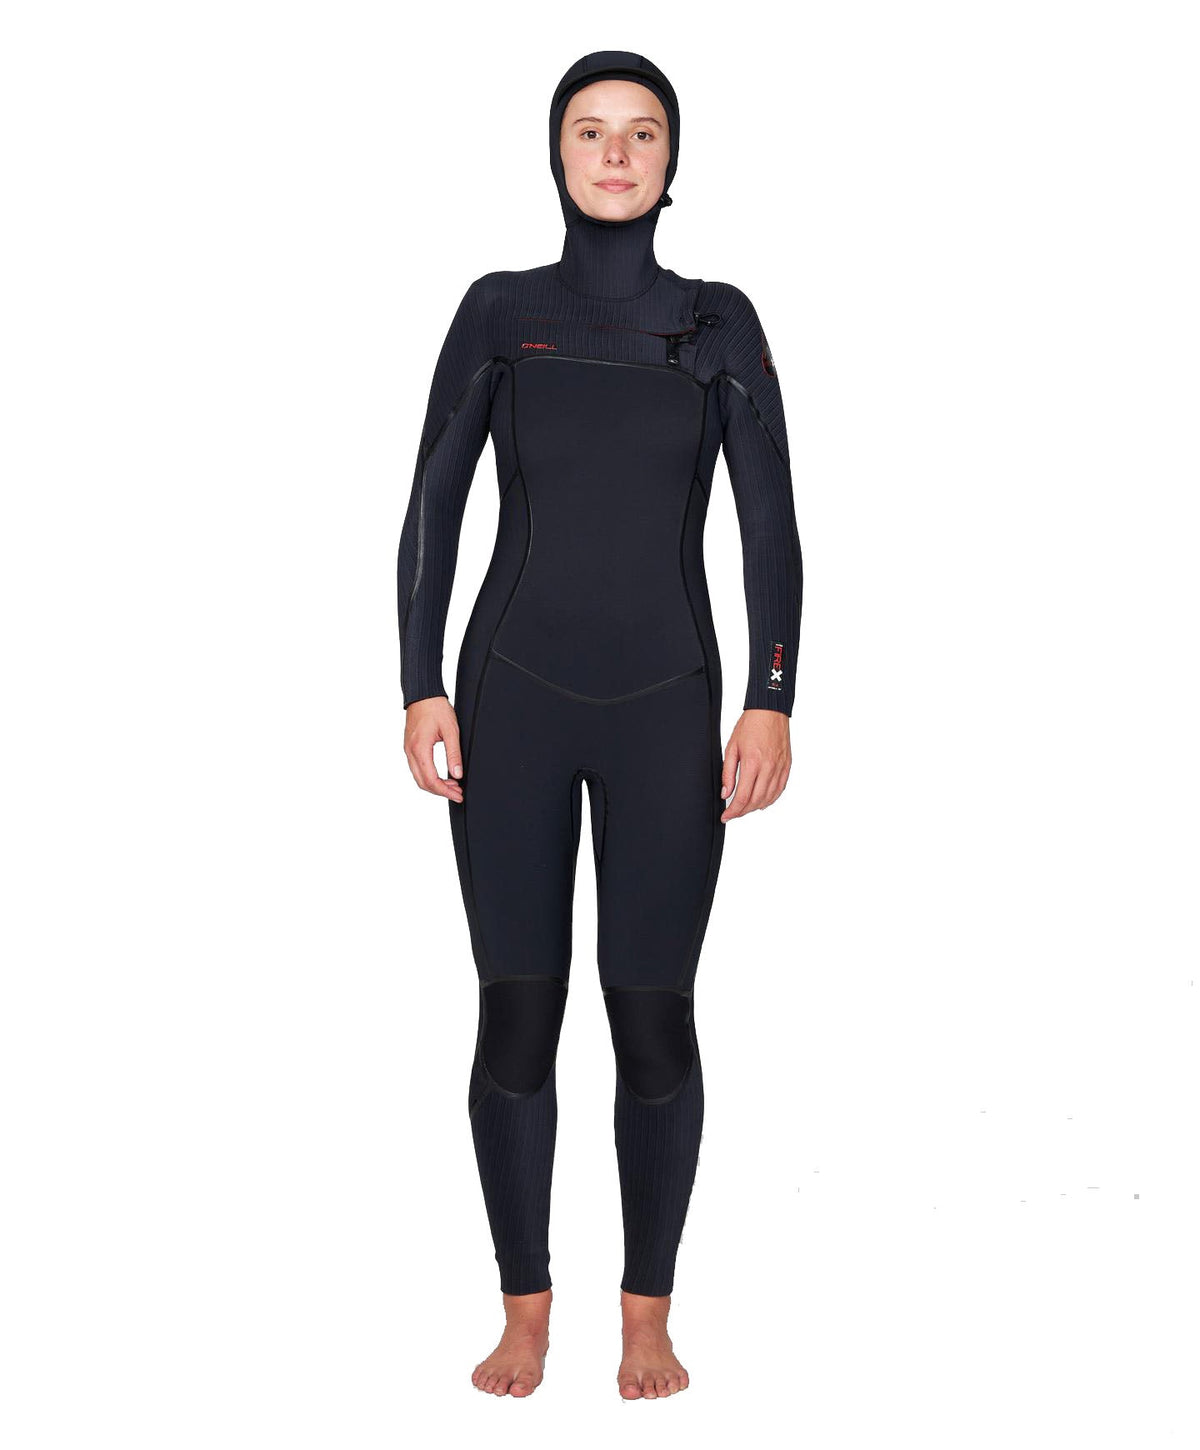 Women's HyperFire X 5/4mm Hooded Steamer Chest Zip Wetsuit - Black